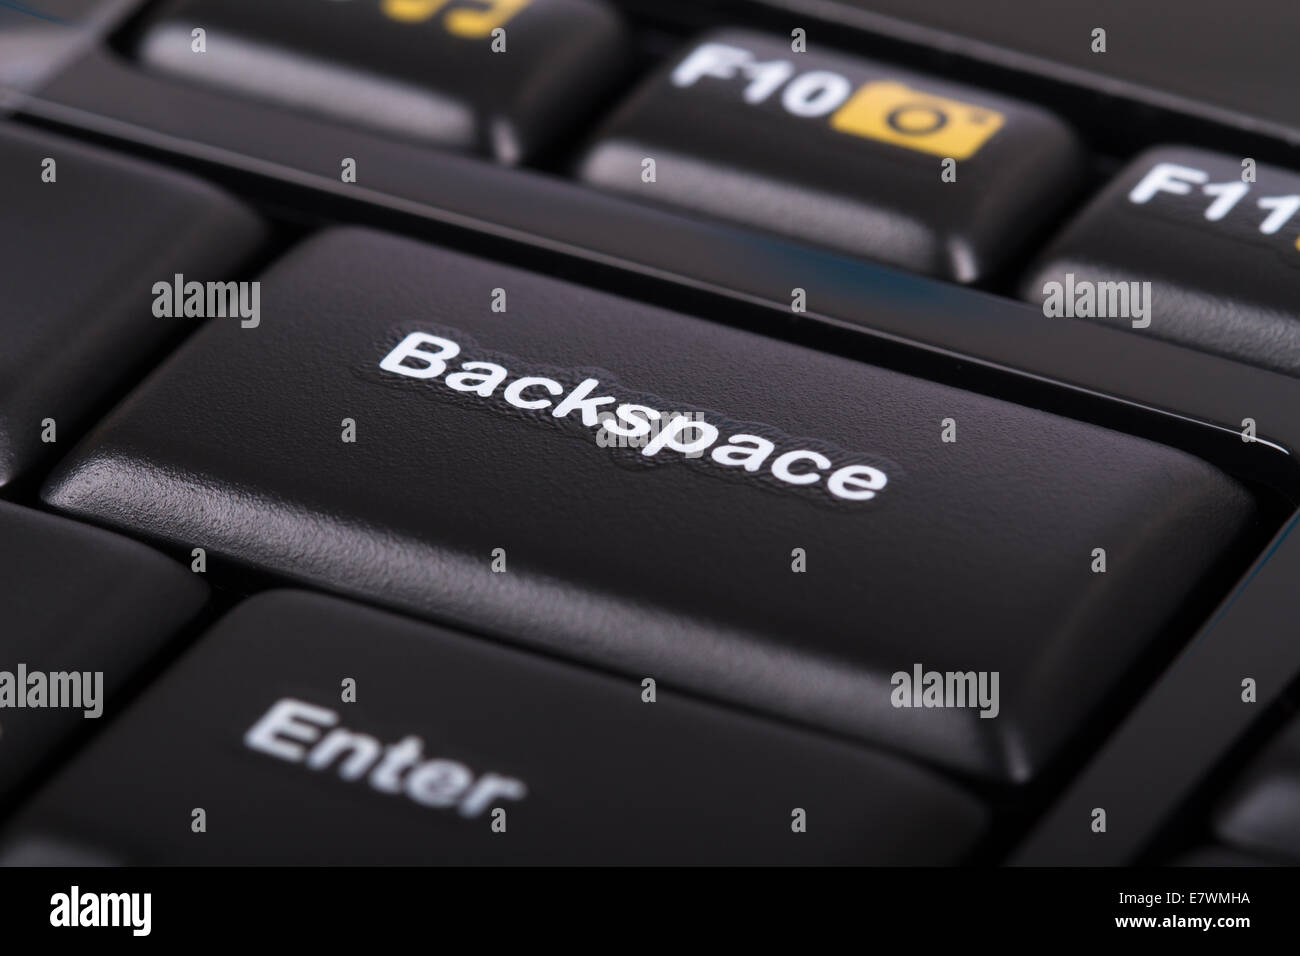 Backspace на клавиатуре. Backspace на игровой клавиатуре. Backspace на клавиатуре хонор. Контрл плюс бекспейс. Бэкспейс на клавиатуре что это значит